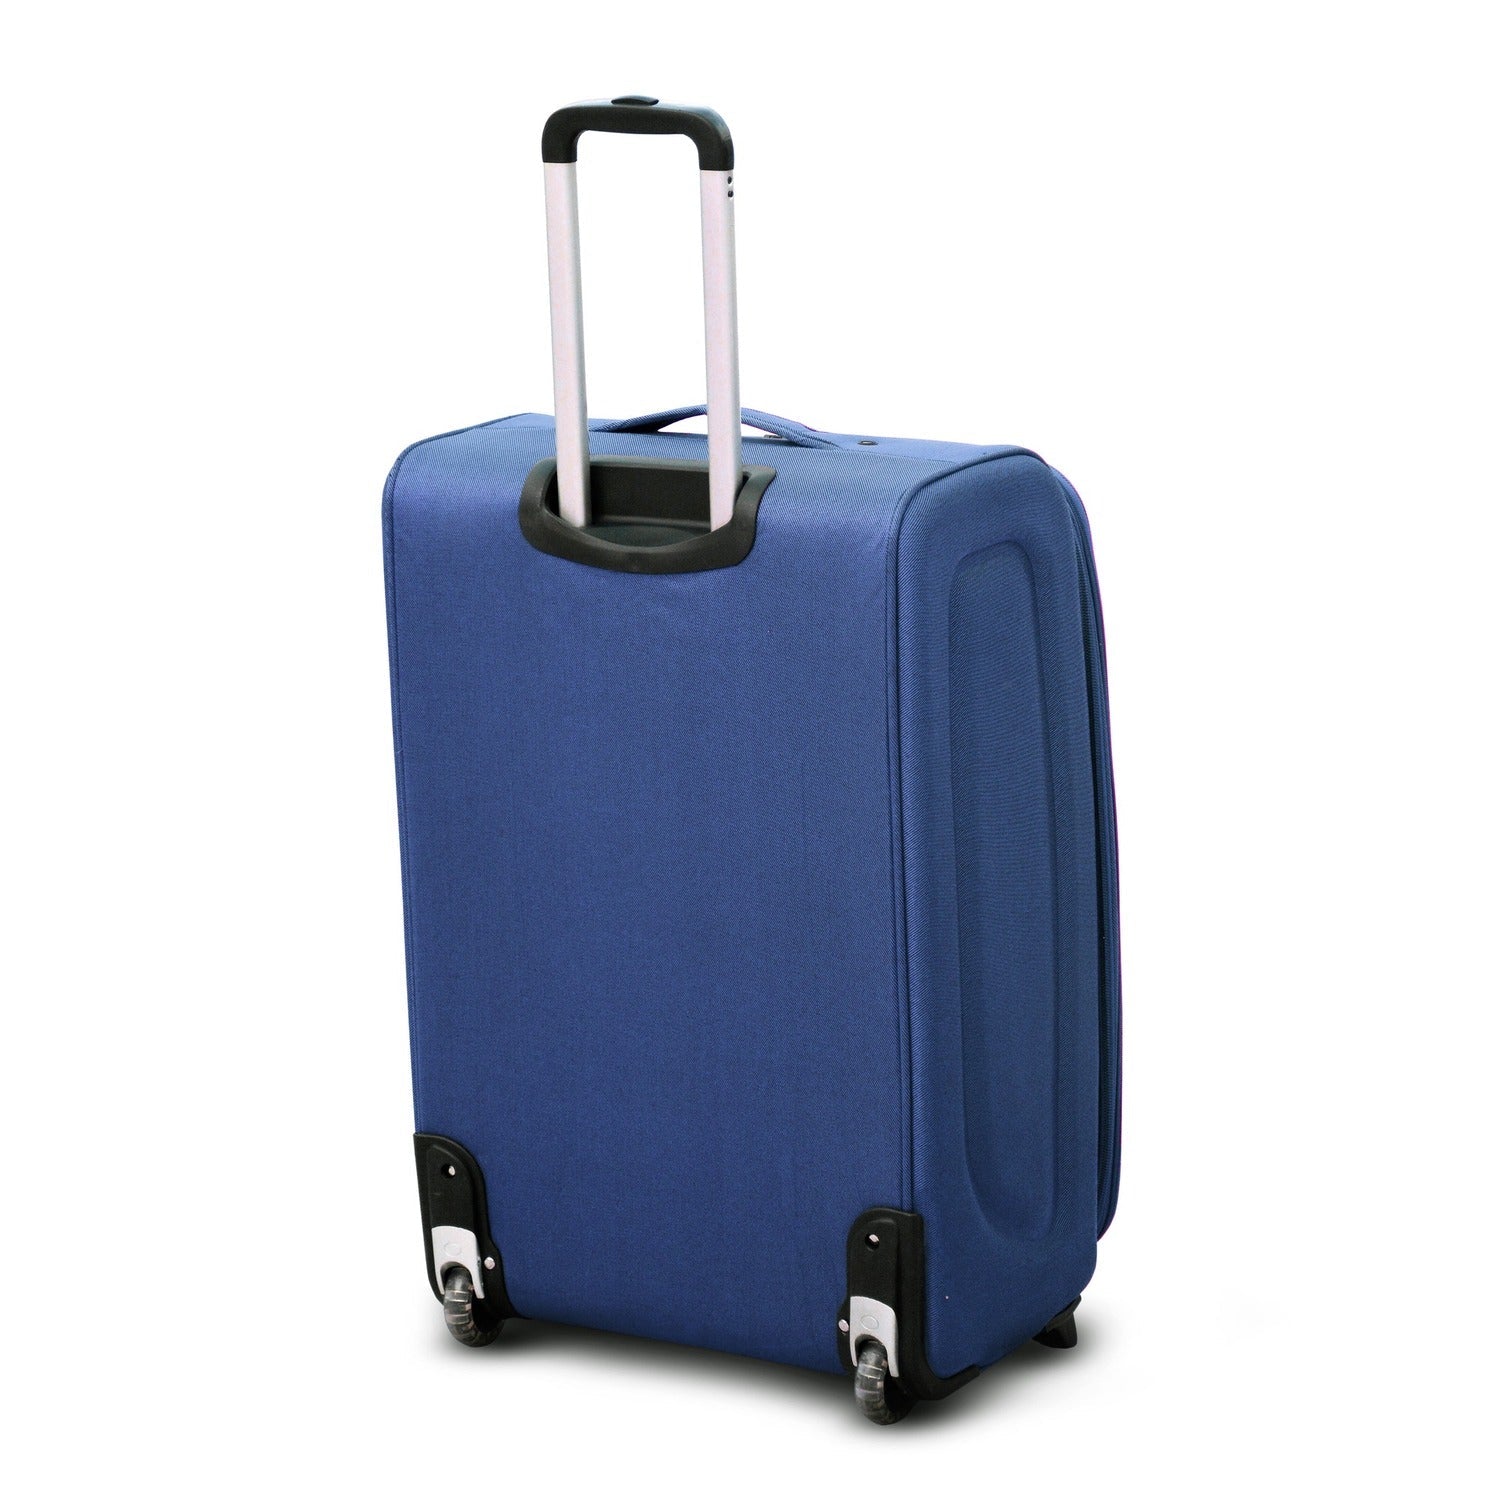 24" Blue Colour SJ JIAN 2 Wheel Luggage Lightweight Soft Material Trolley Bag